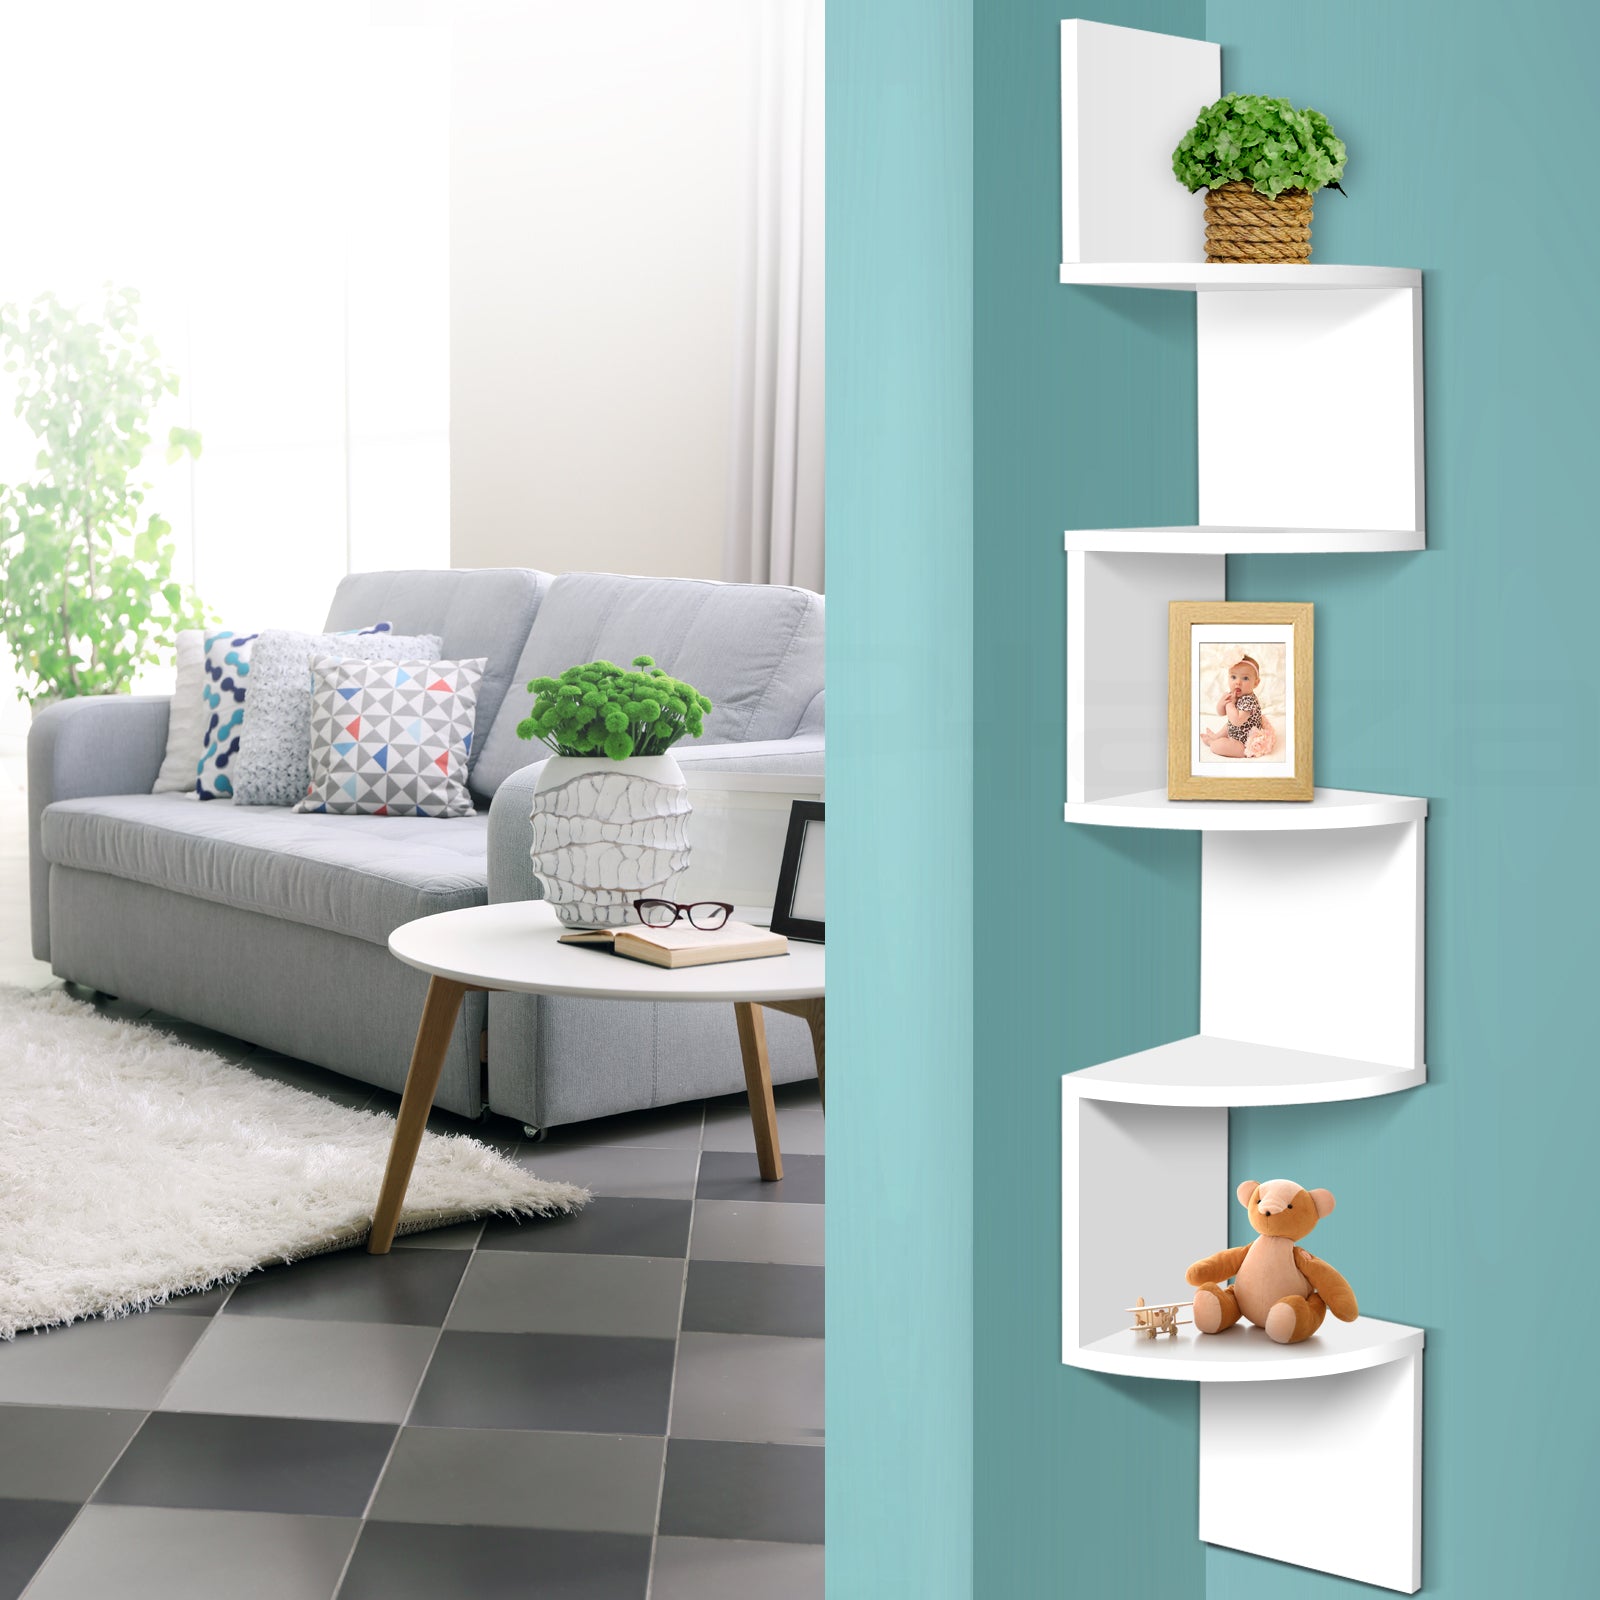 5 Tier Corner Wall Bookase Shelf Display Storage Cabinet - White